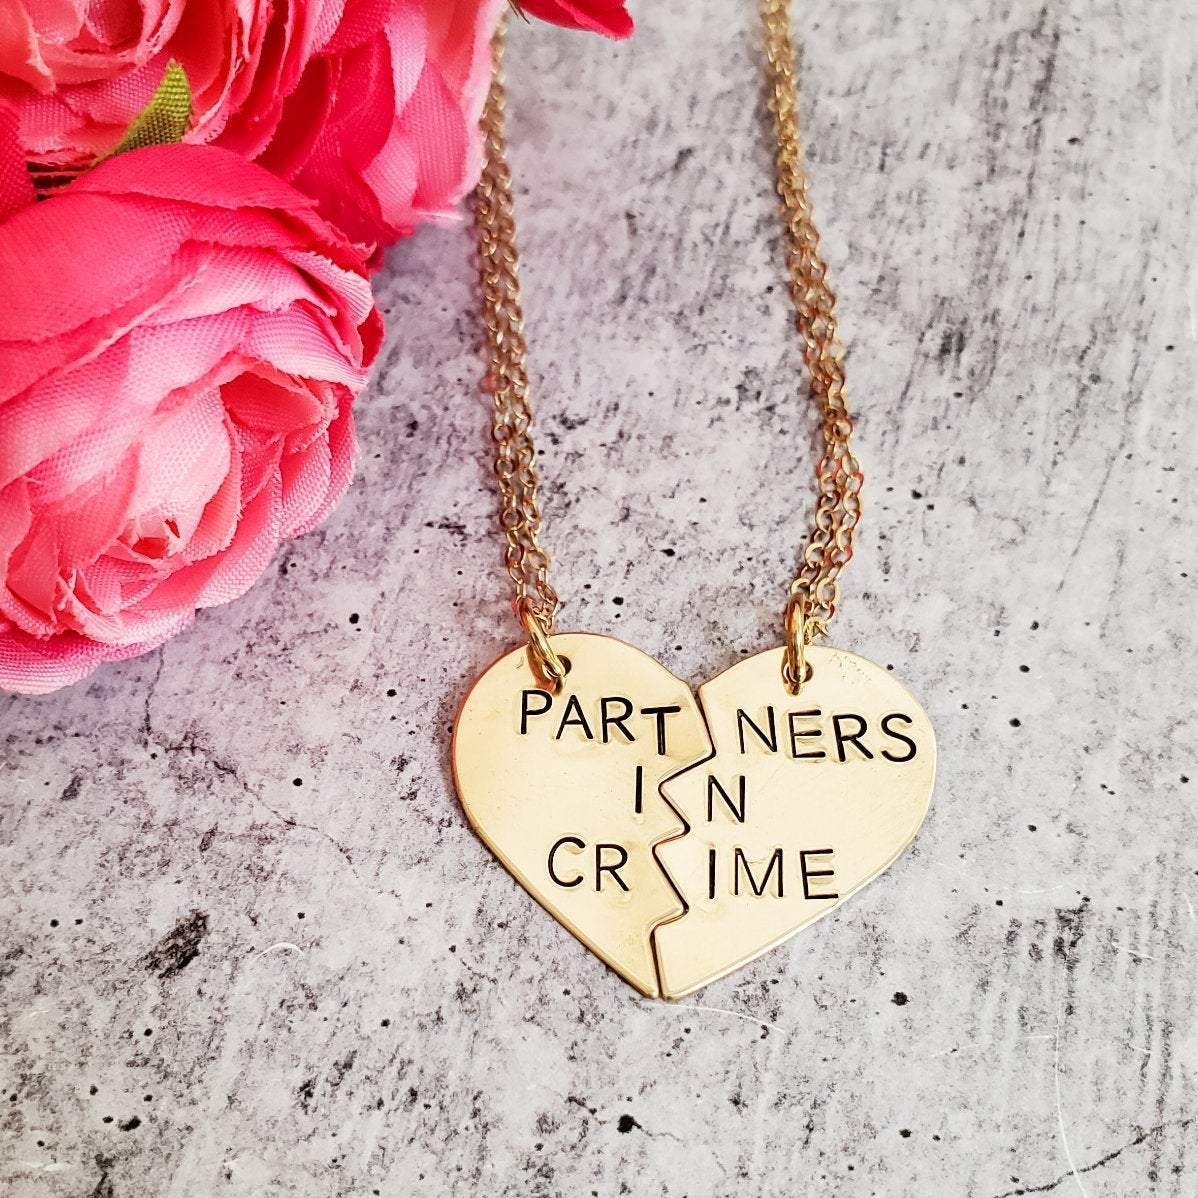 PARTNERS IN CRIME Broken Heart Friendship Necklaces Salt and Sparkle